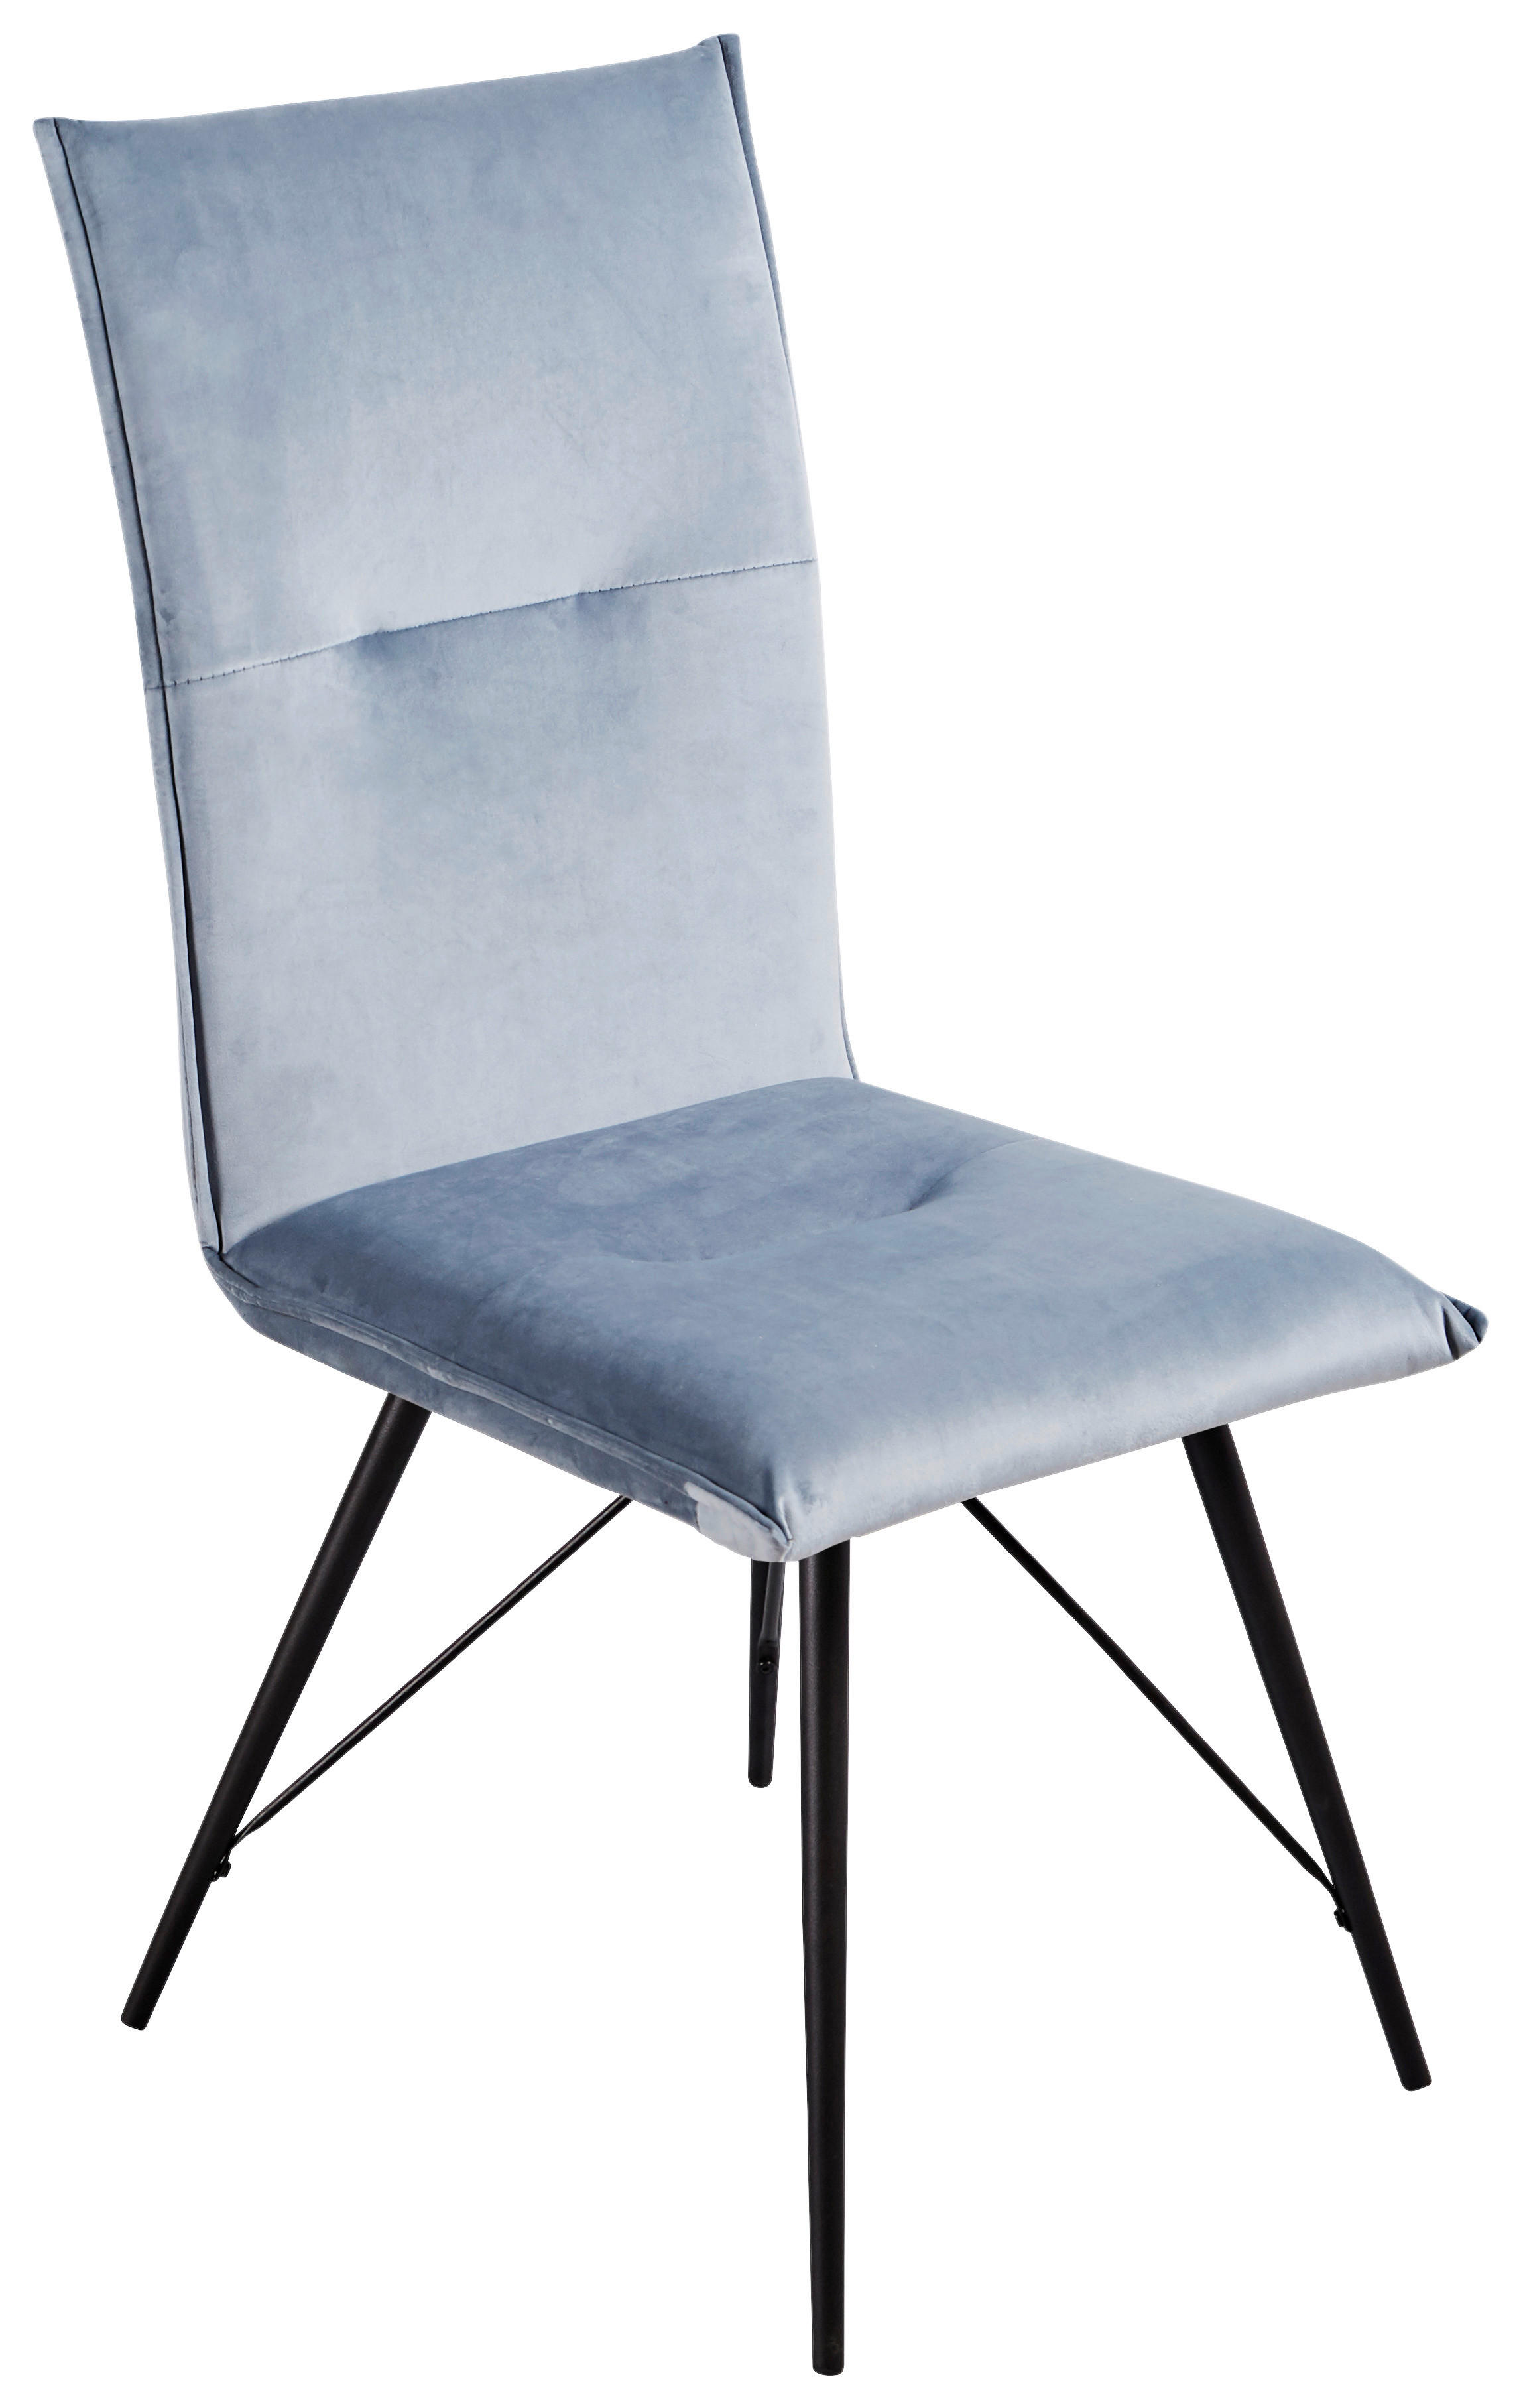 STUHL Samt Blau  - Blau/Schwarz, Design, Textil/Metall (49/99/63cm) - Carryhome